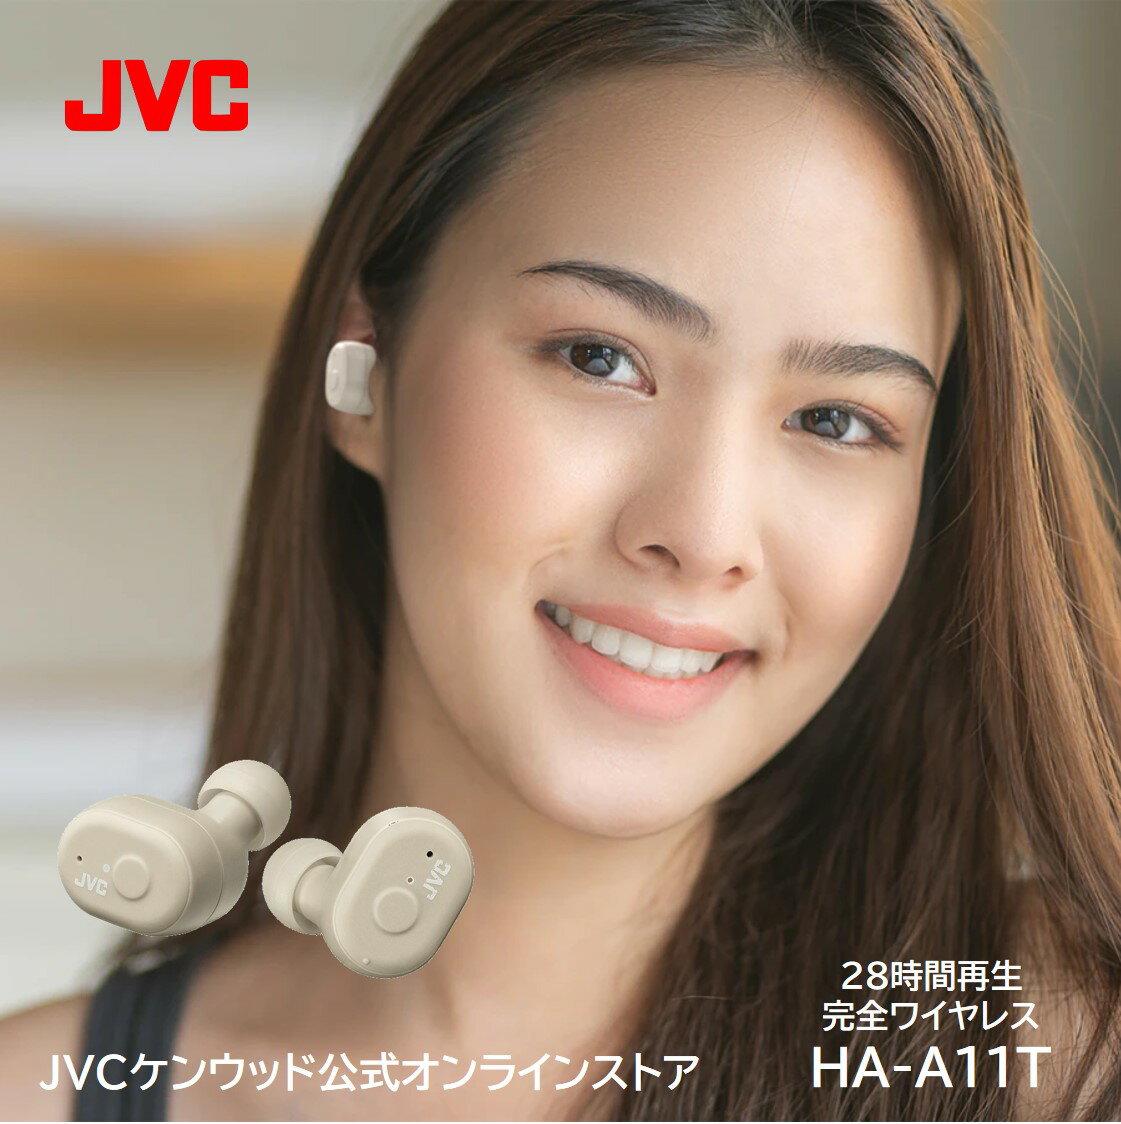 JVC 小型 軽量 完全ワイヤレス イヤホン HA-A11T | 長時間再生 ブルートゥース5.1 防水 bluetooth5.1 両耳 片耳 左右分離型 クイック充電 急速充電 JVC ケンウッド iphone android ワイヤレス イヤホン マイク付き 通話可能 マイク内蔵 テレワーク 通勤 通学 充電ケース